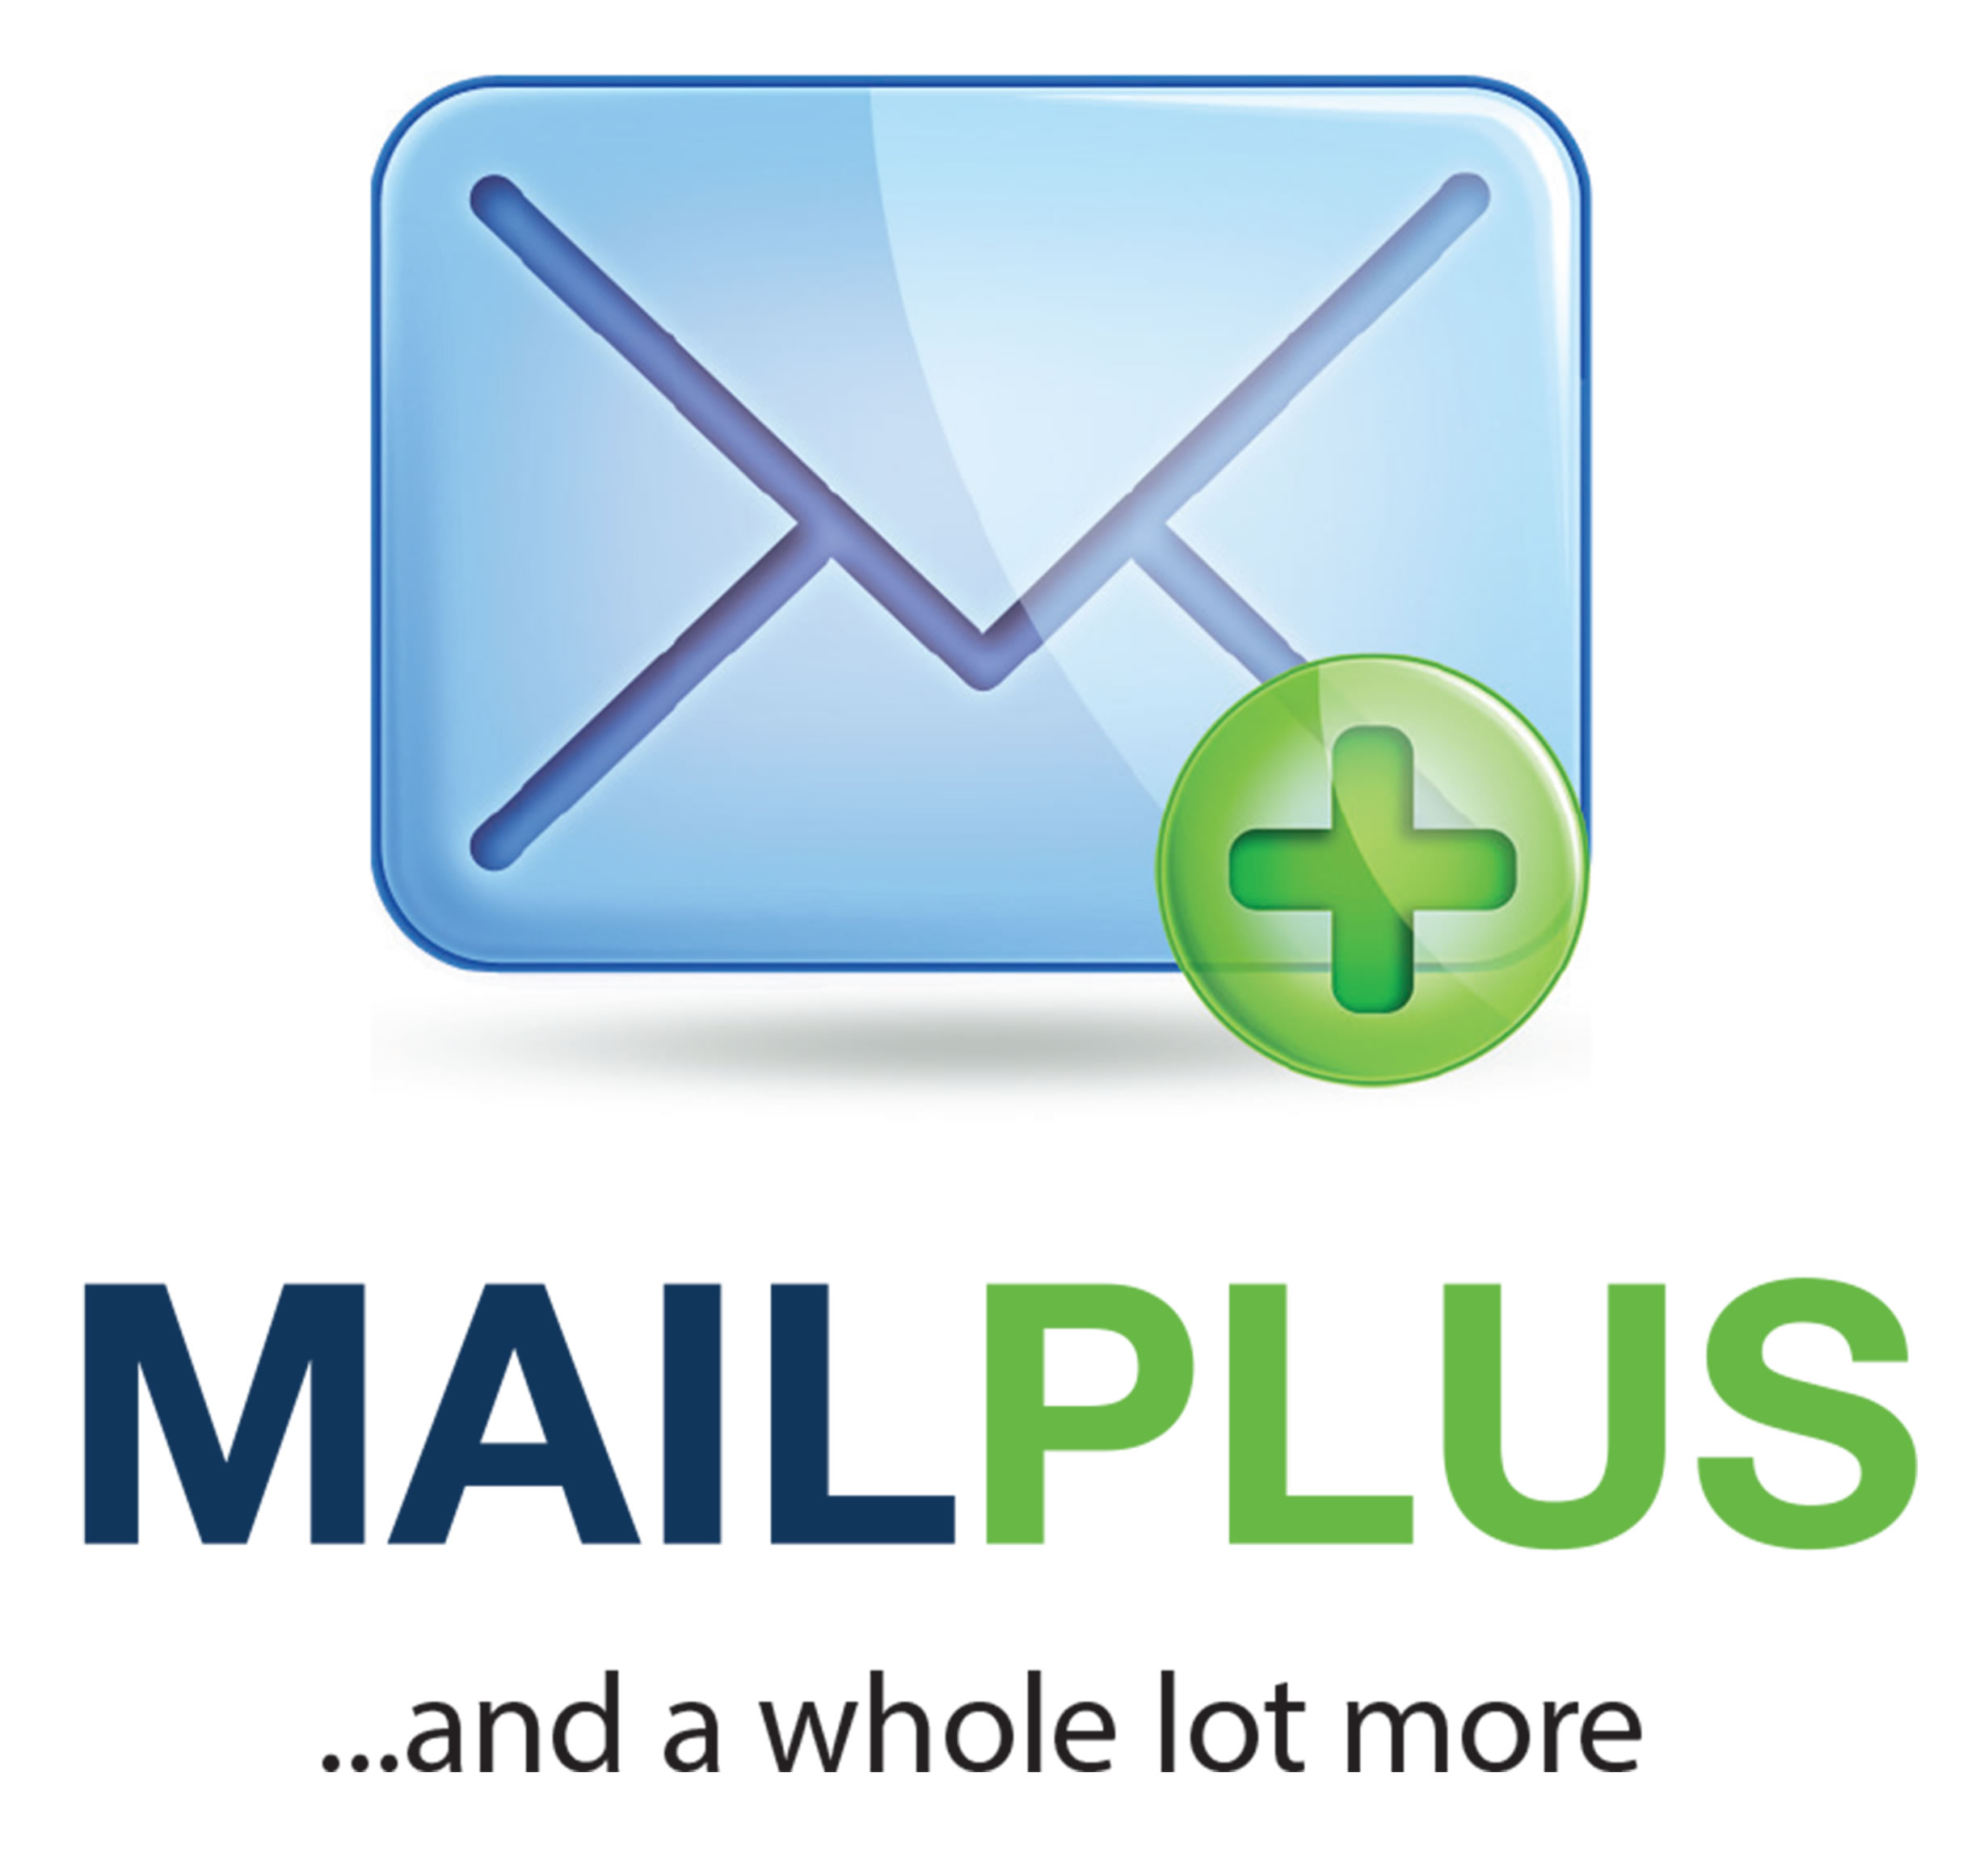 Mail Plus logo 800 res_FINAL-1.jpg